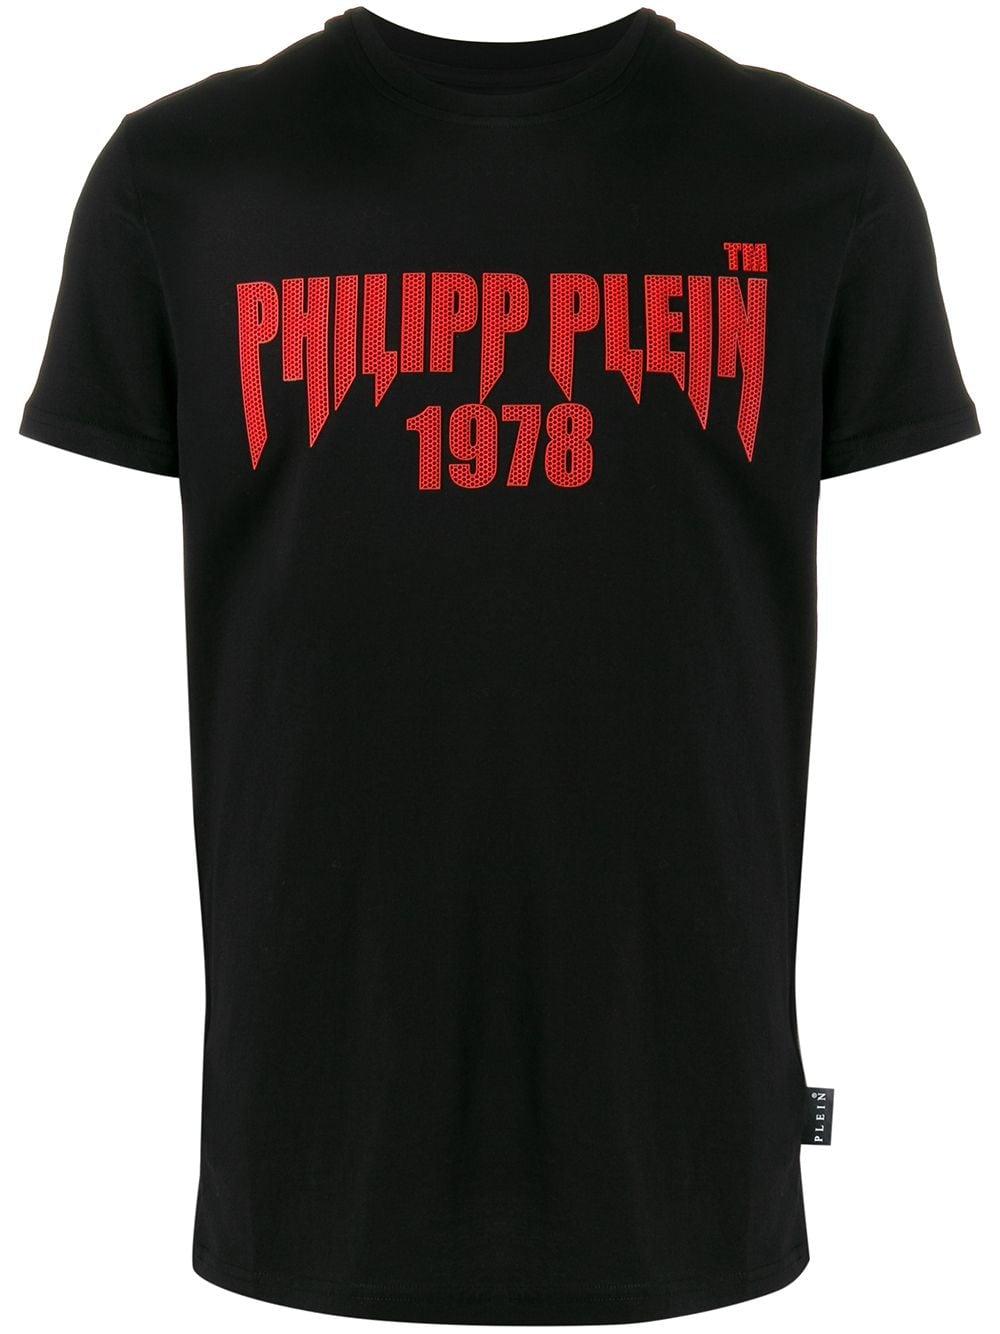 Philipp Plein Cotton 1978 Logo Print T-shirt in Black for Men - Lyst